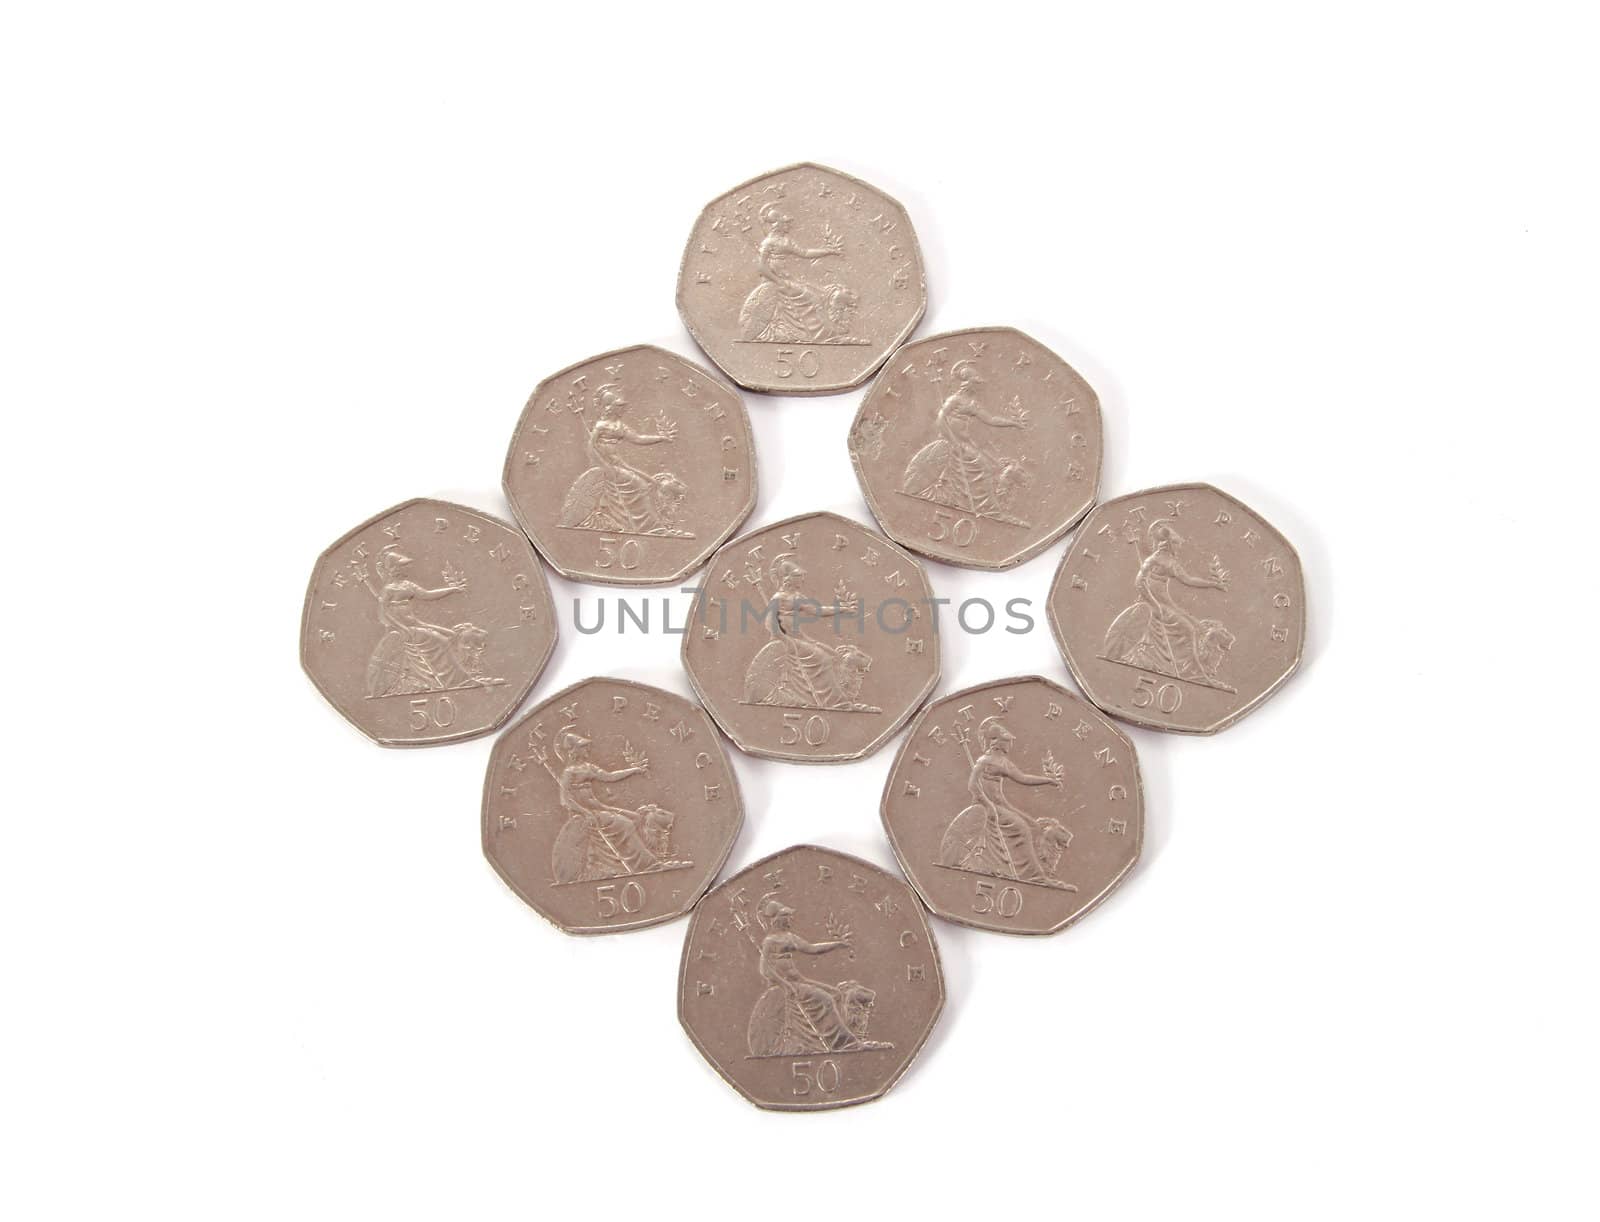 British, UK, coins  on a plain white background.